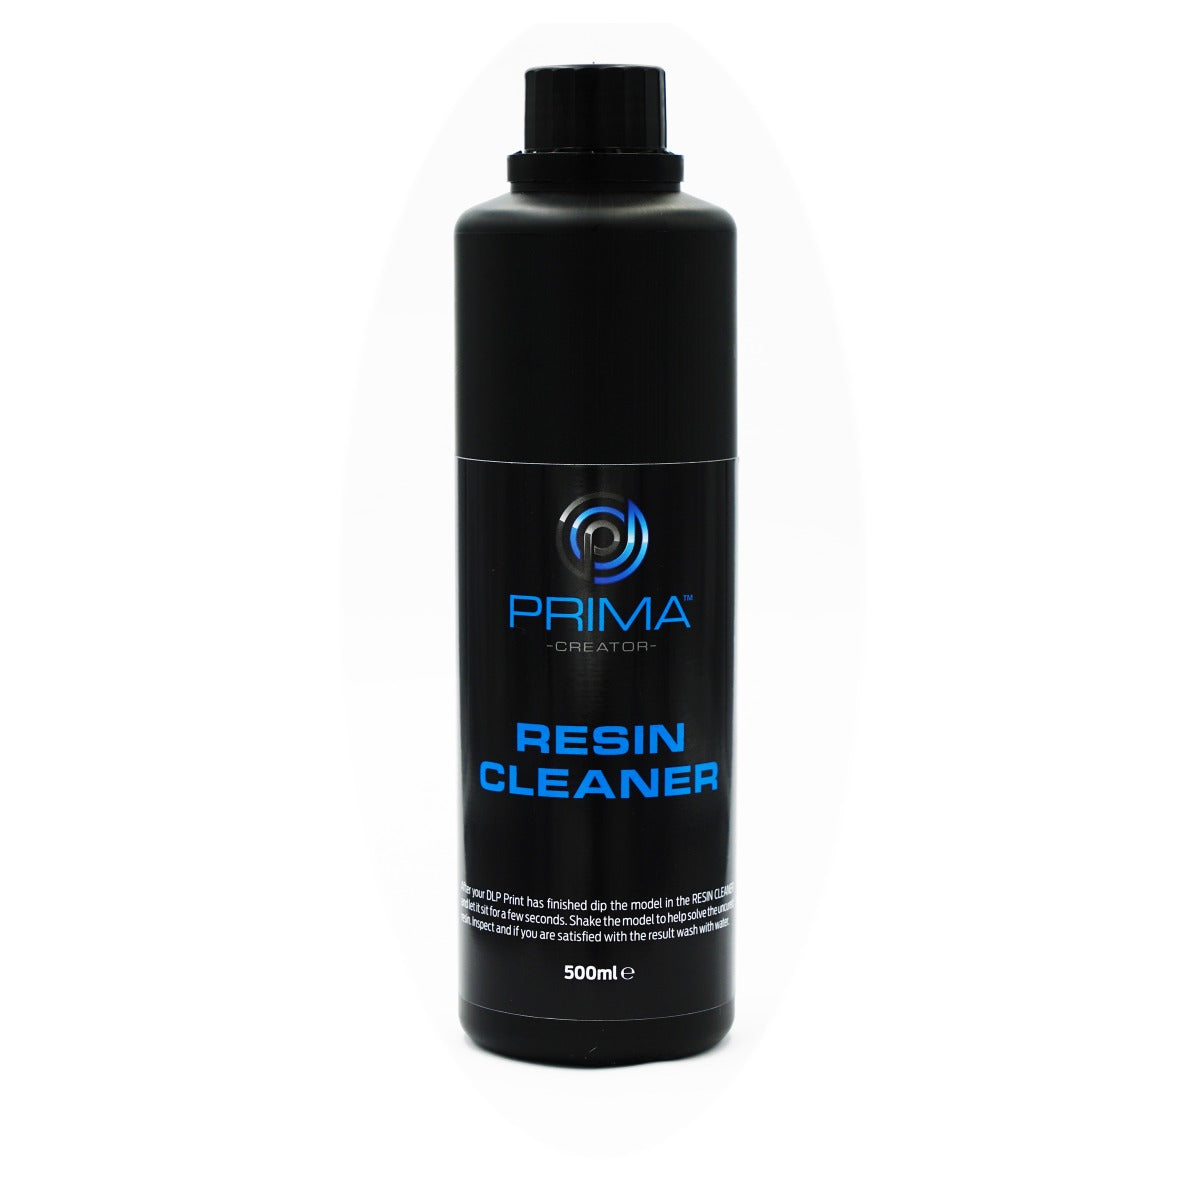 PrimaCreator Resin Cleaner - 500ml - Cleaning liquid